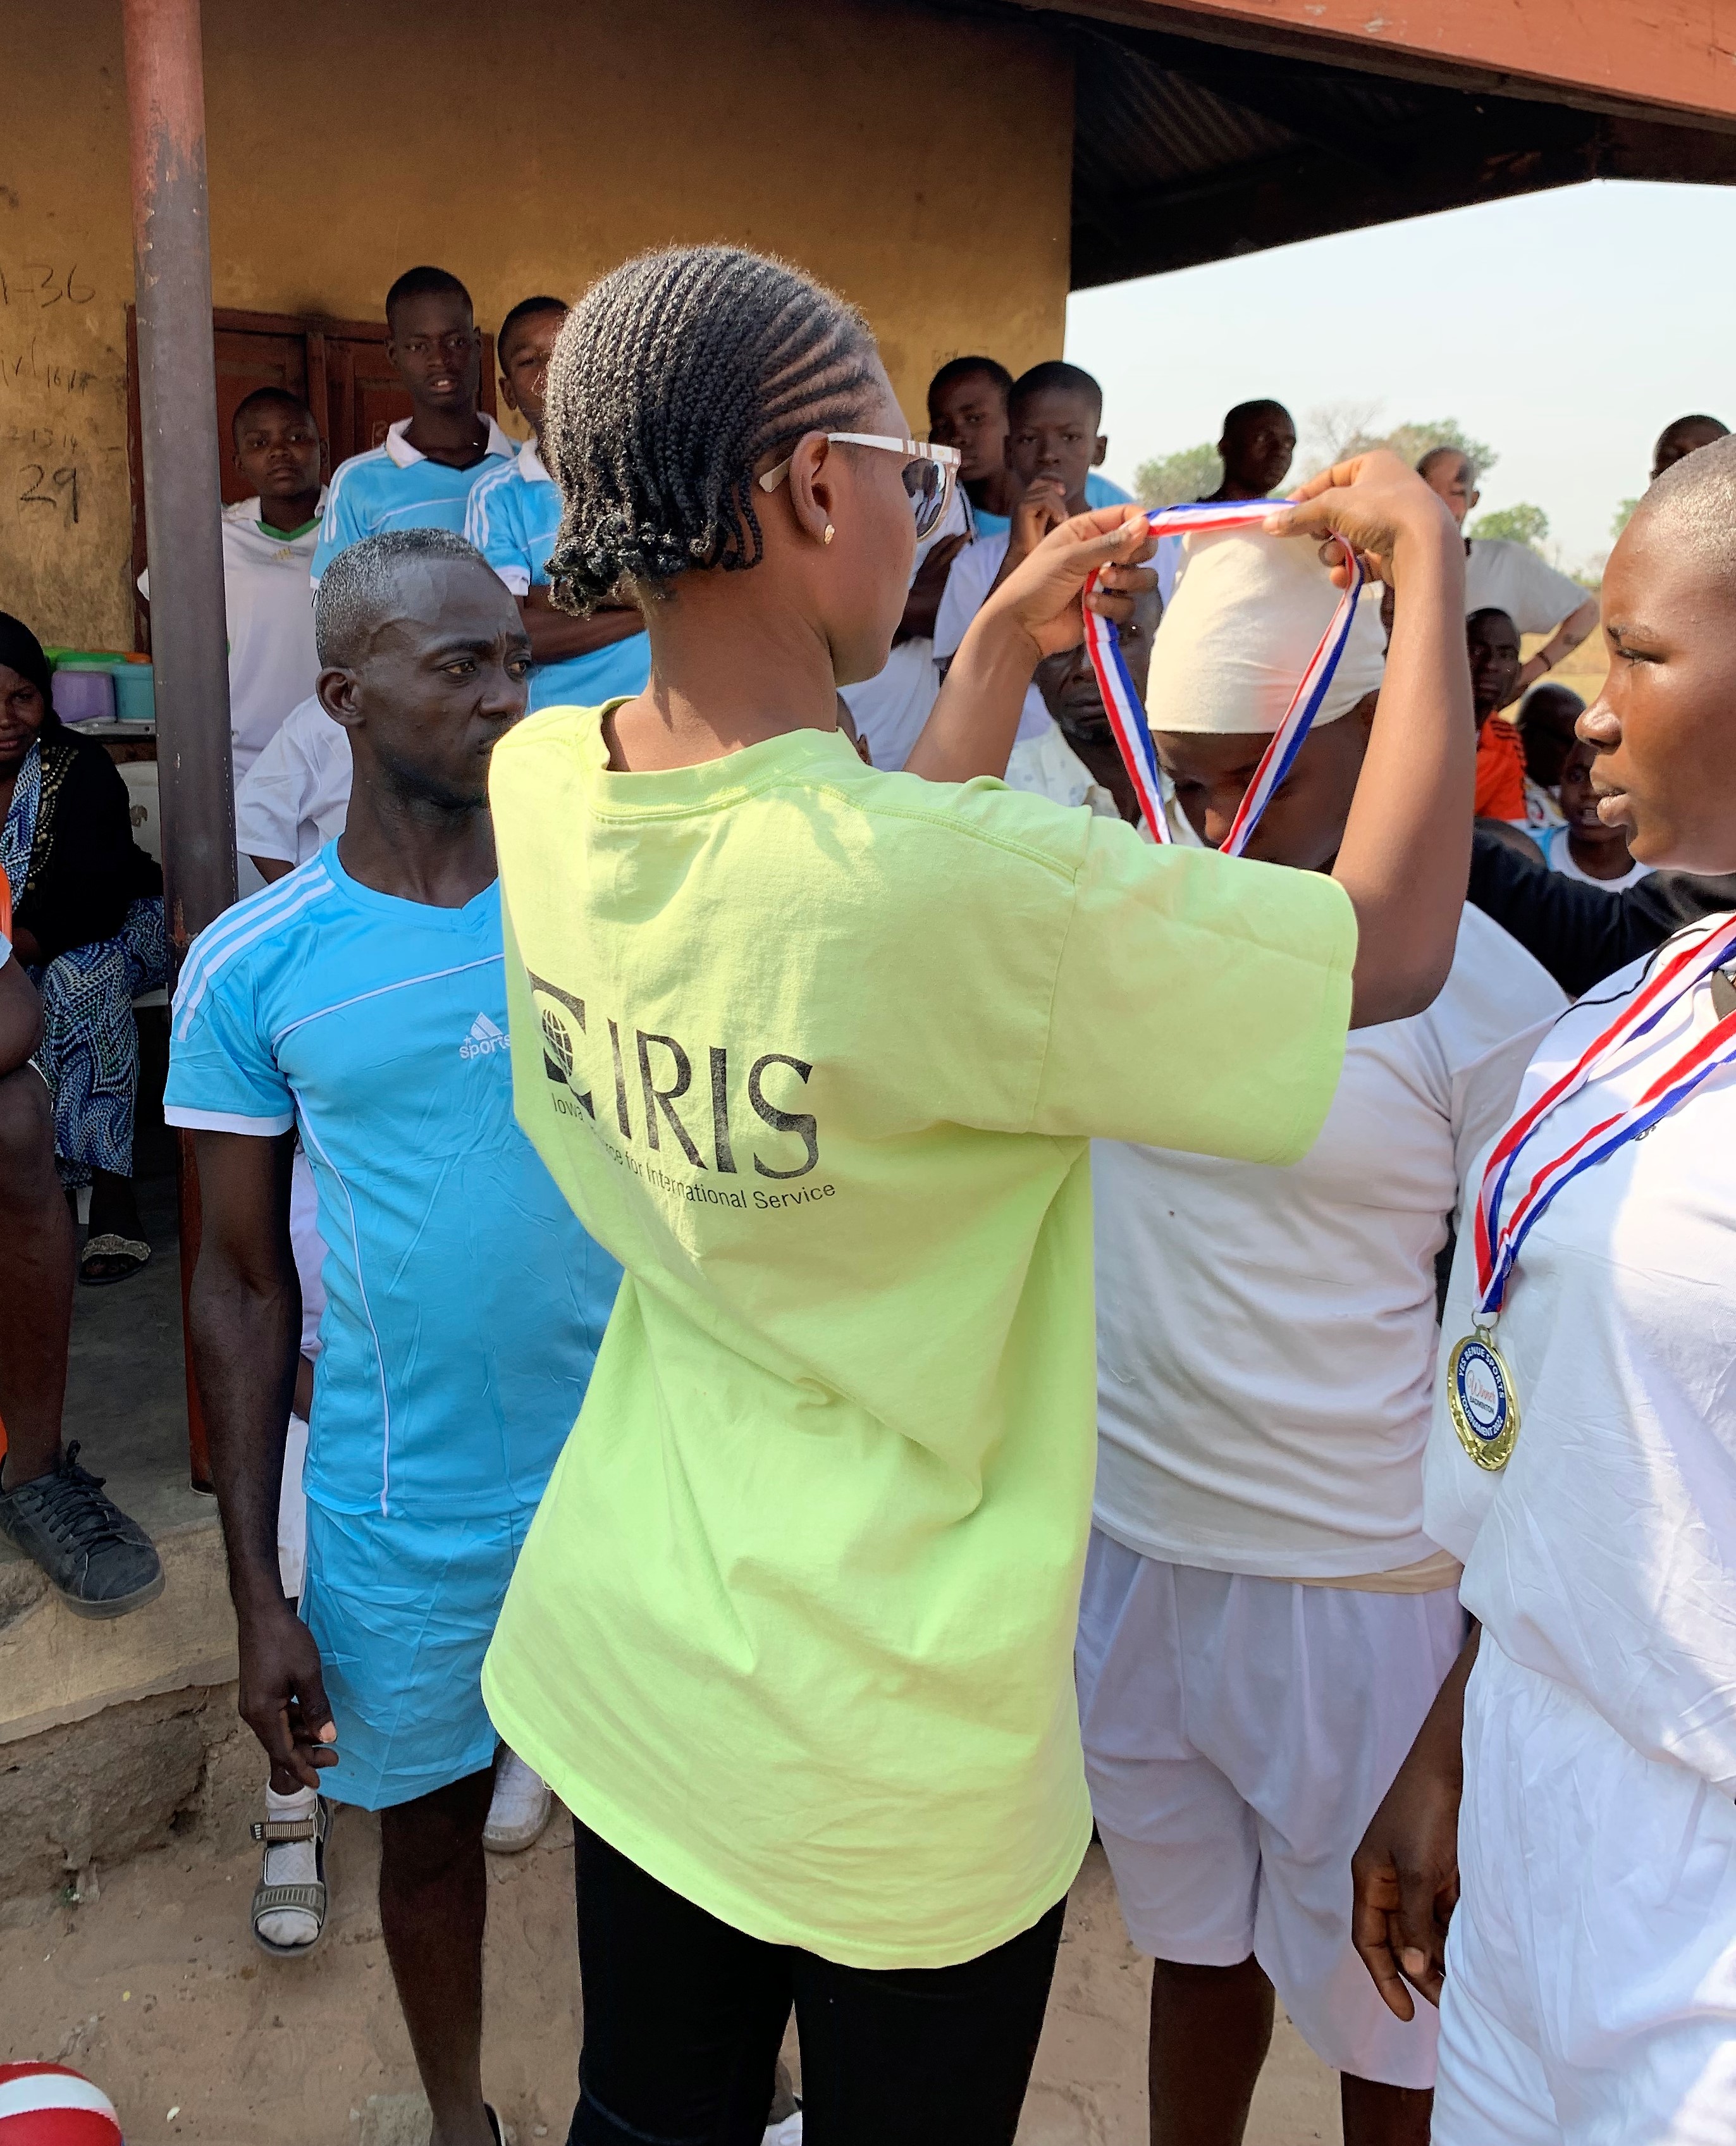 a YES alum wearing an IRIS tshirt puts medals around participants' necks